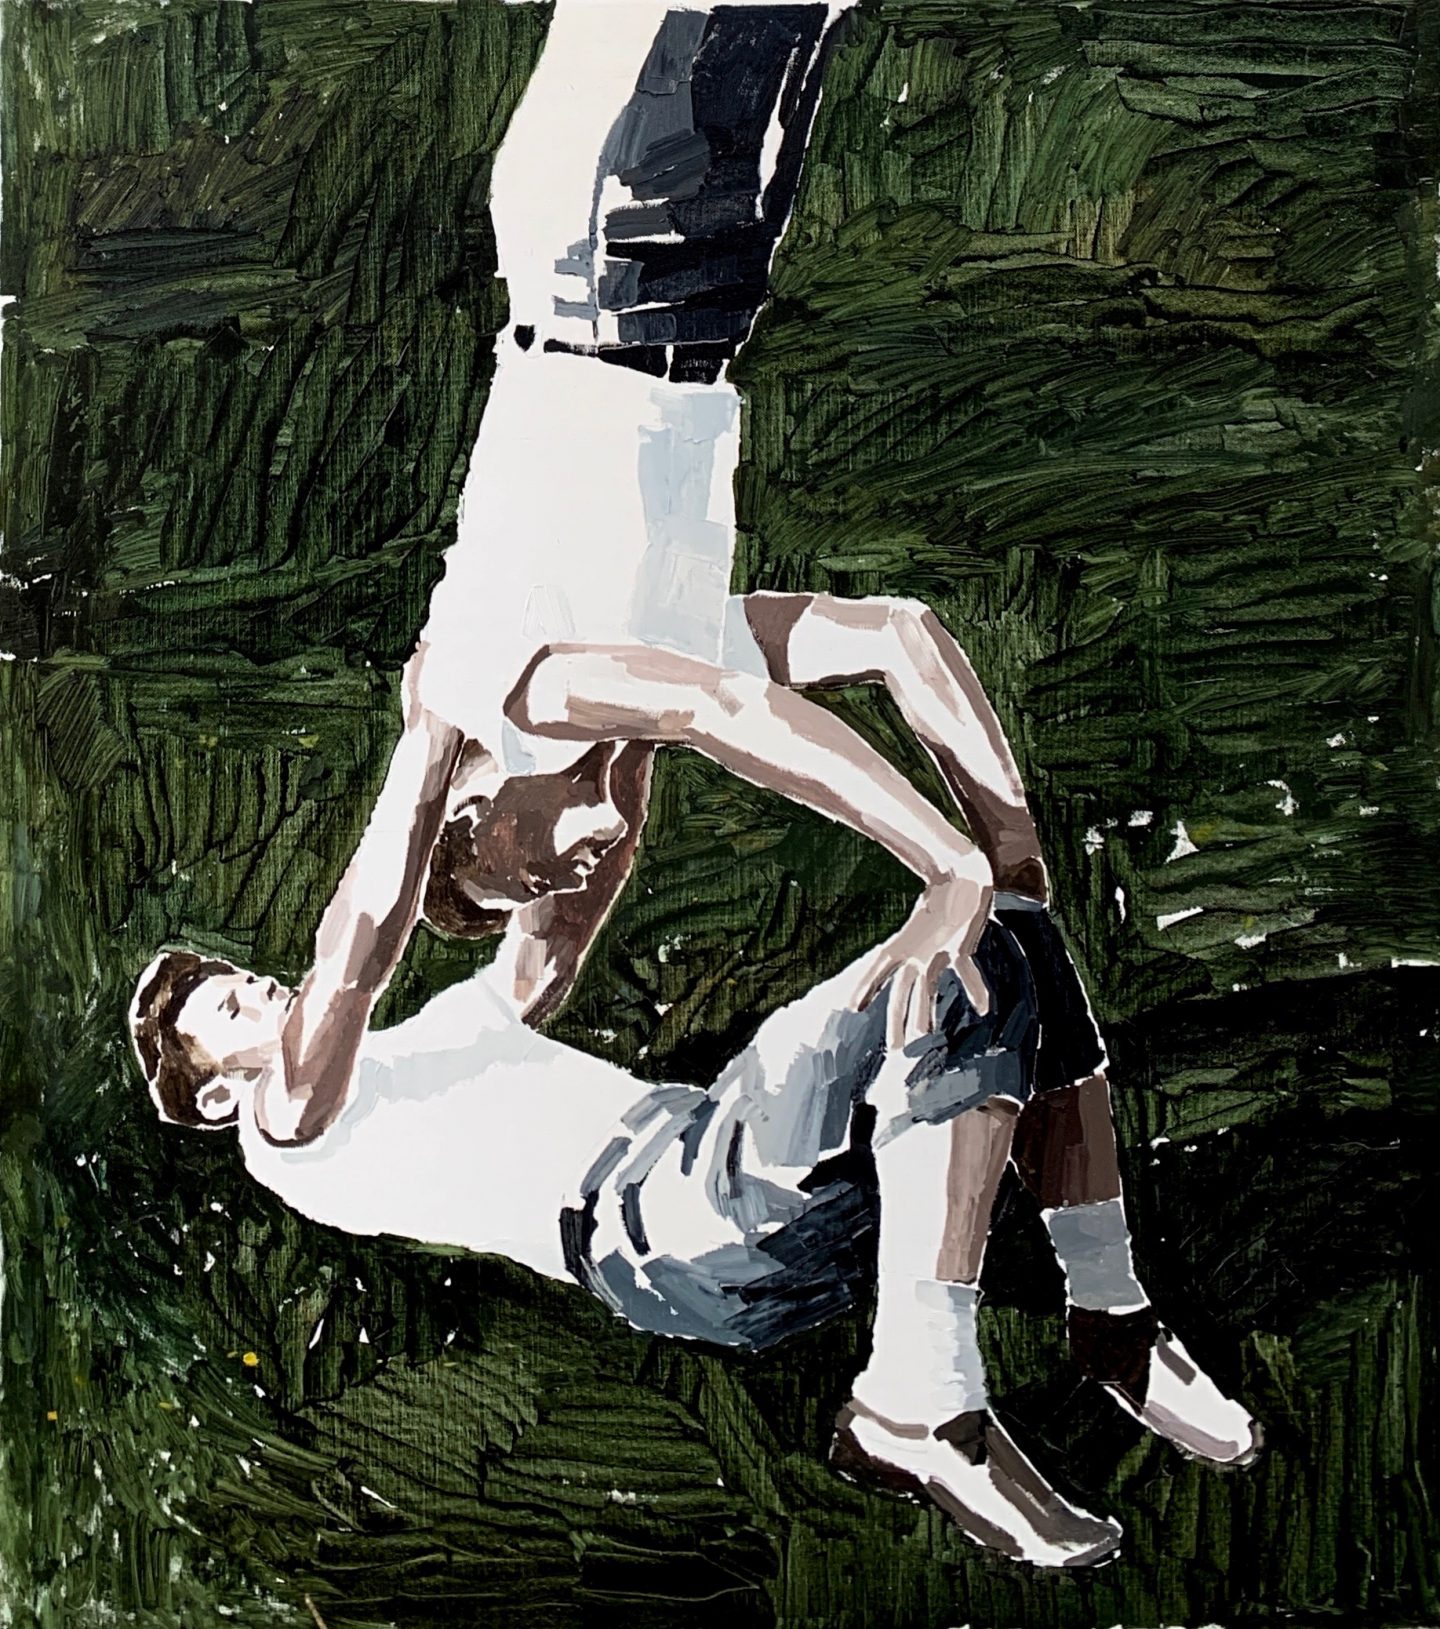 Clara Adolphs, ‘Upside Down’, 2019, oil on linen, 115 x 102 cm